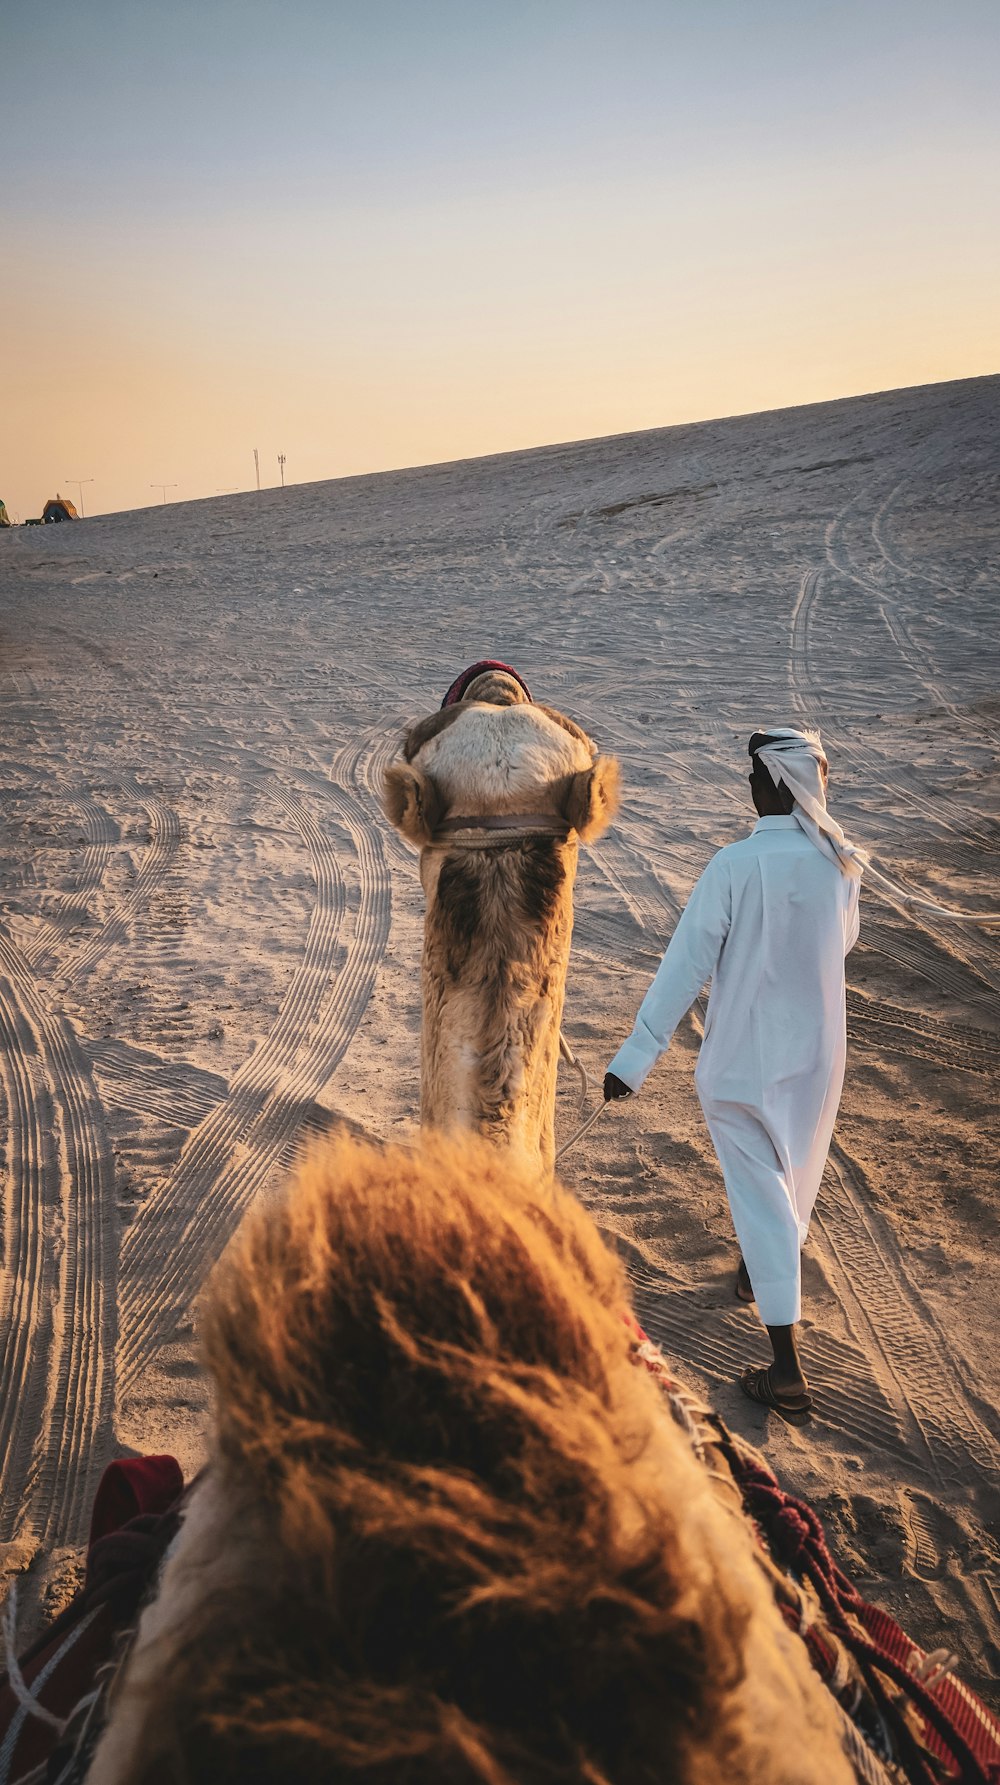 man in white robe standing beside brown camel during daytime